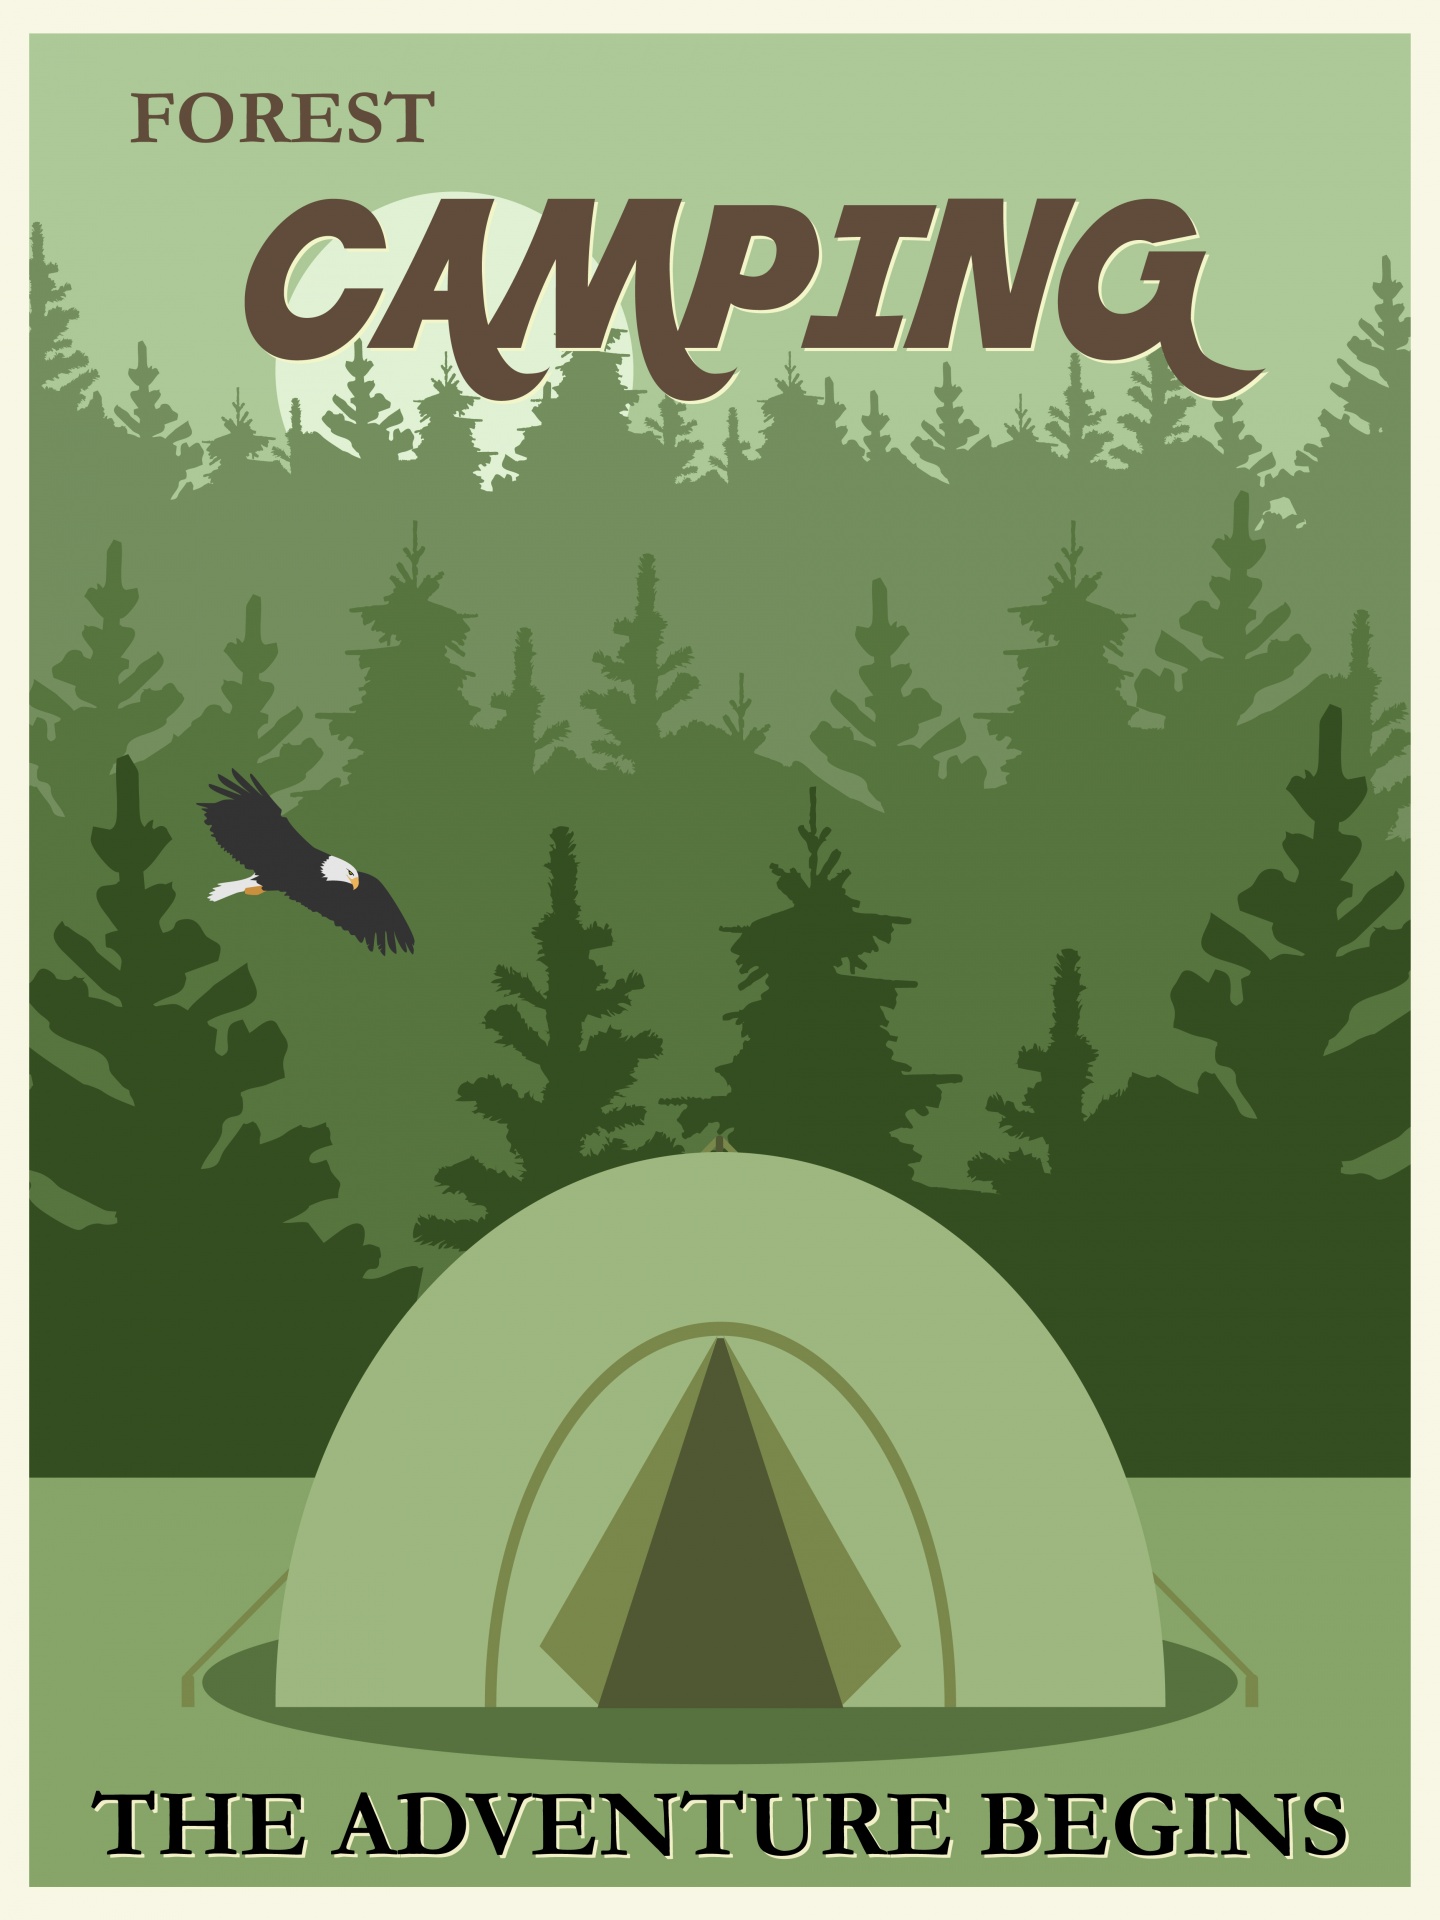 Vintage Forest Camping Poster